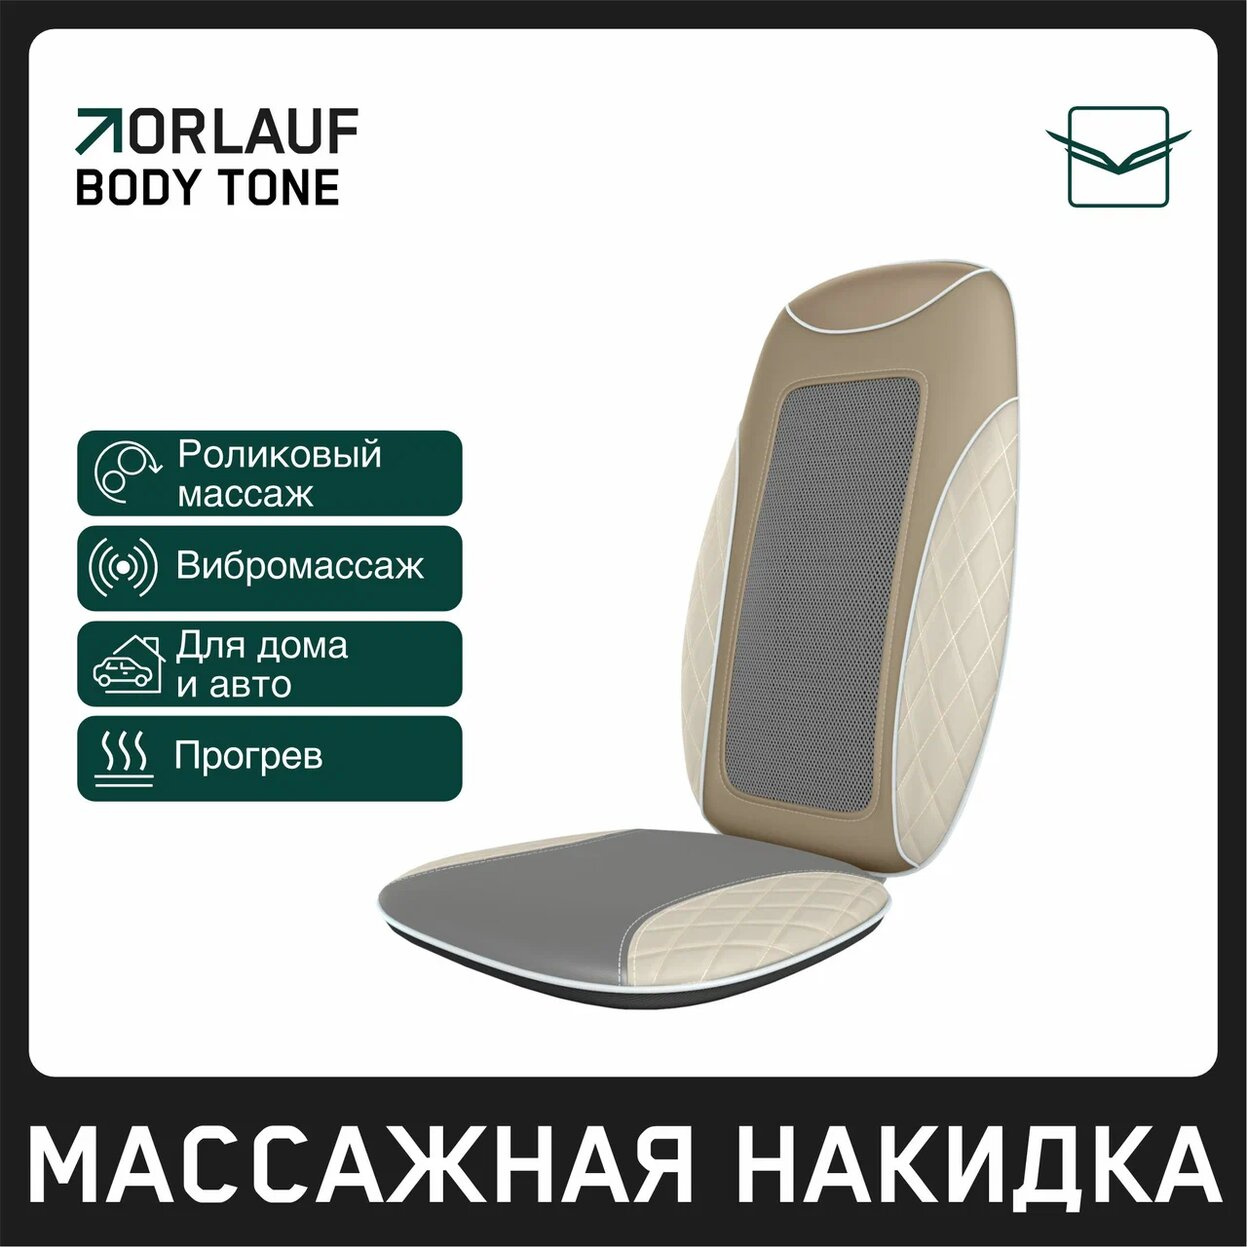 Body Tone в Омске по цене 15400 ₽ в категории каталог Orlauf